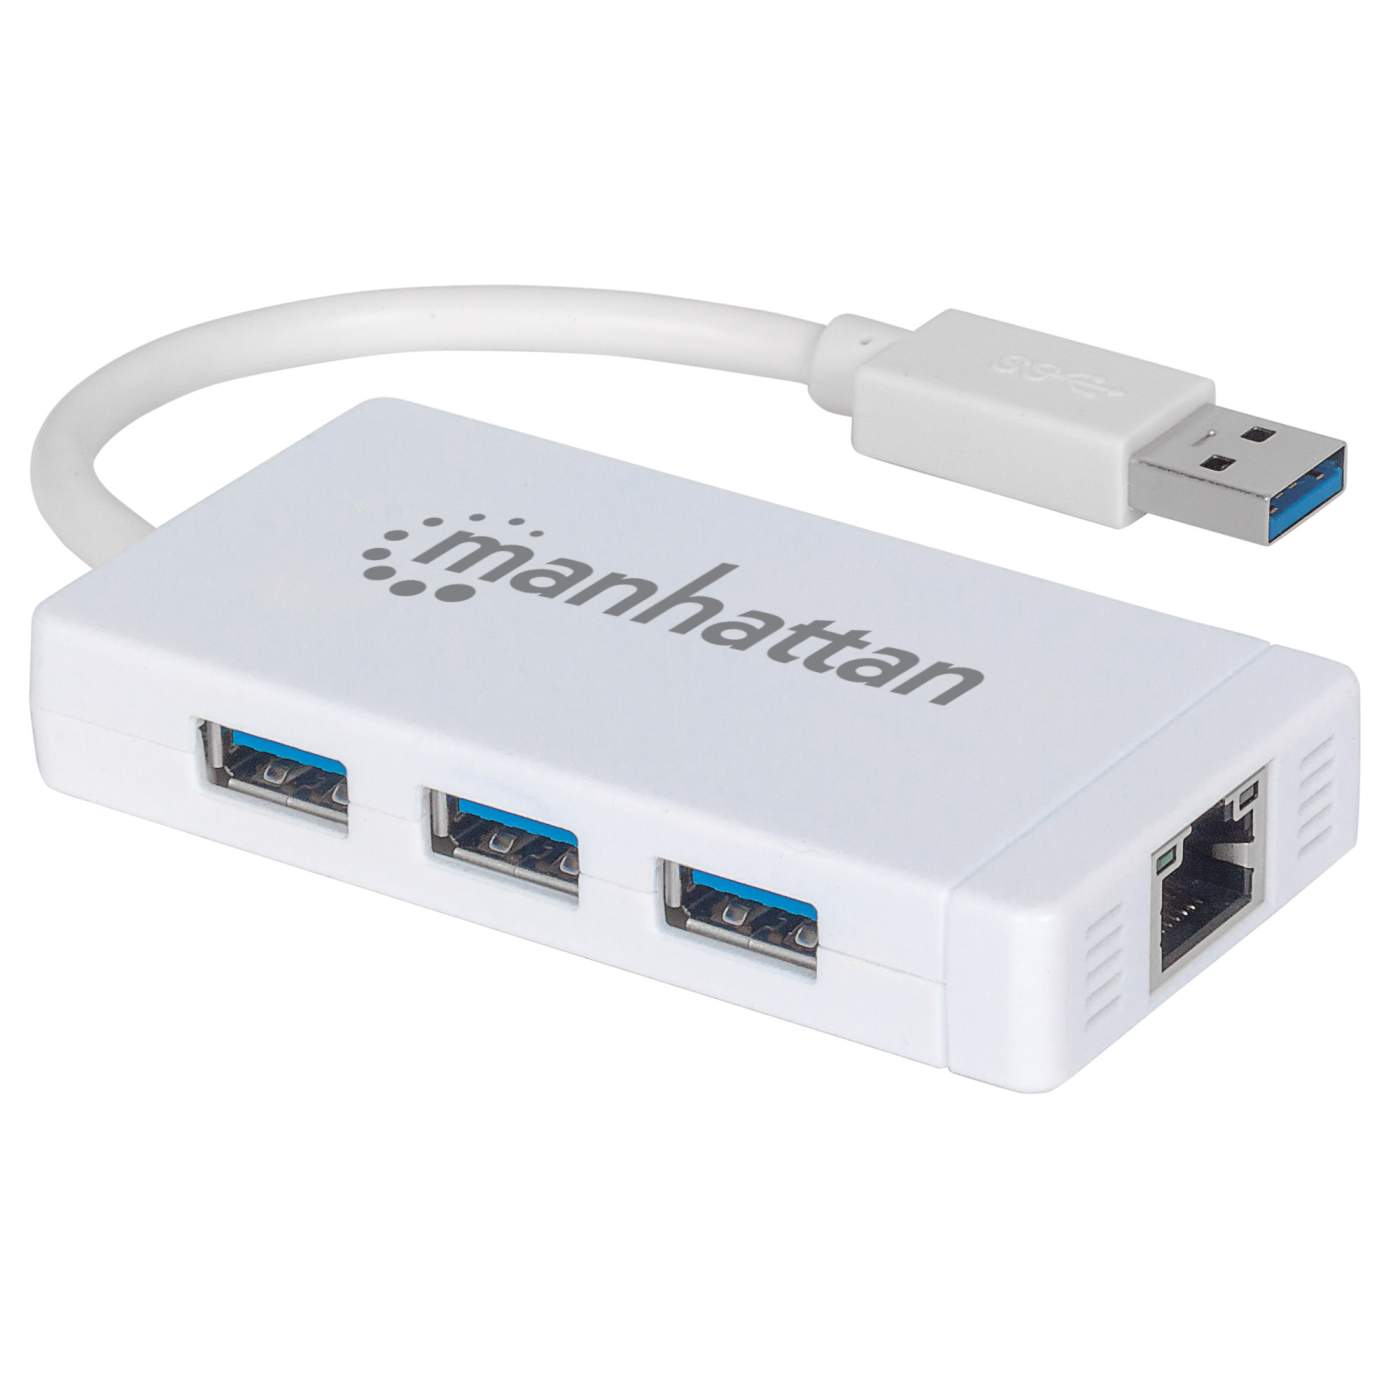 3-Port USB 3.0 Type-A Hub with Gigabit Ethernet Adapter Image 1